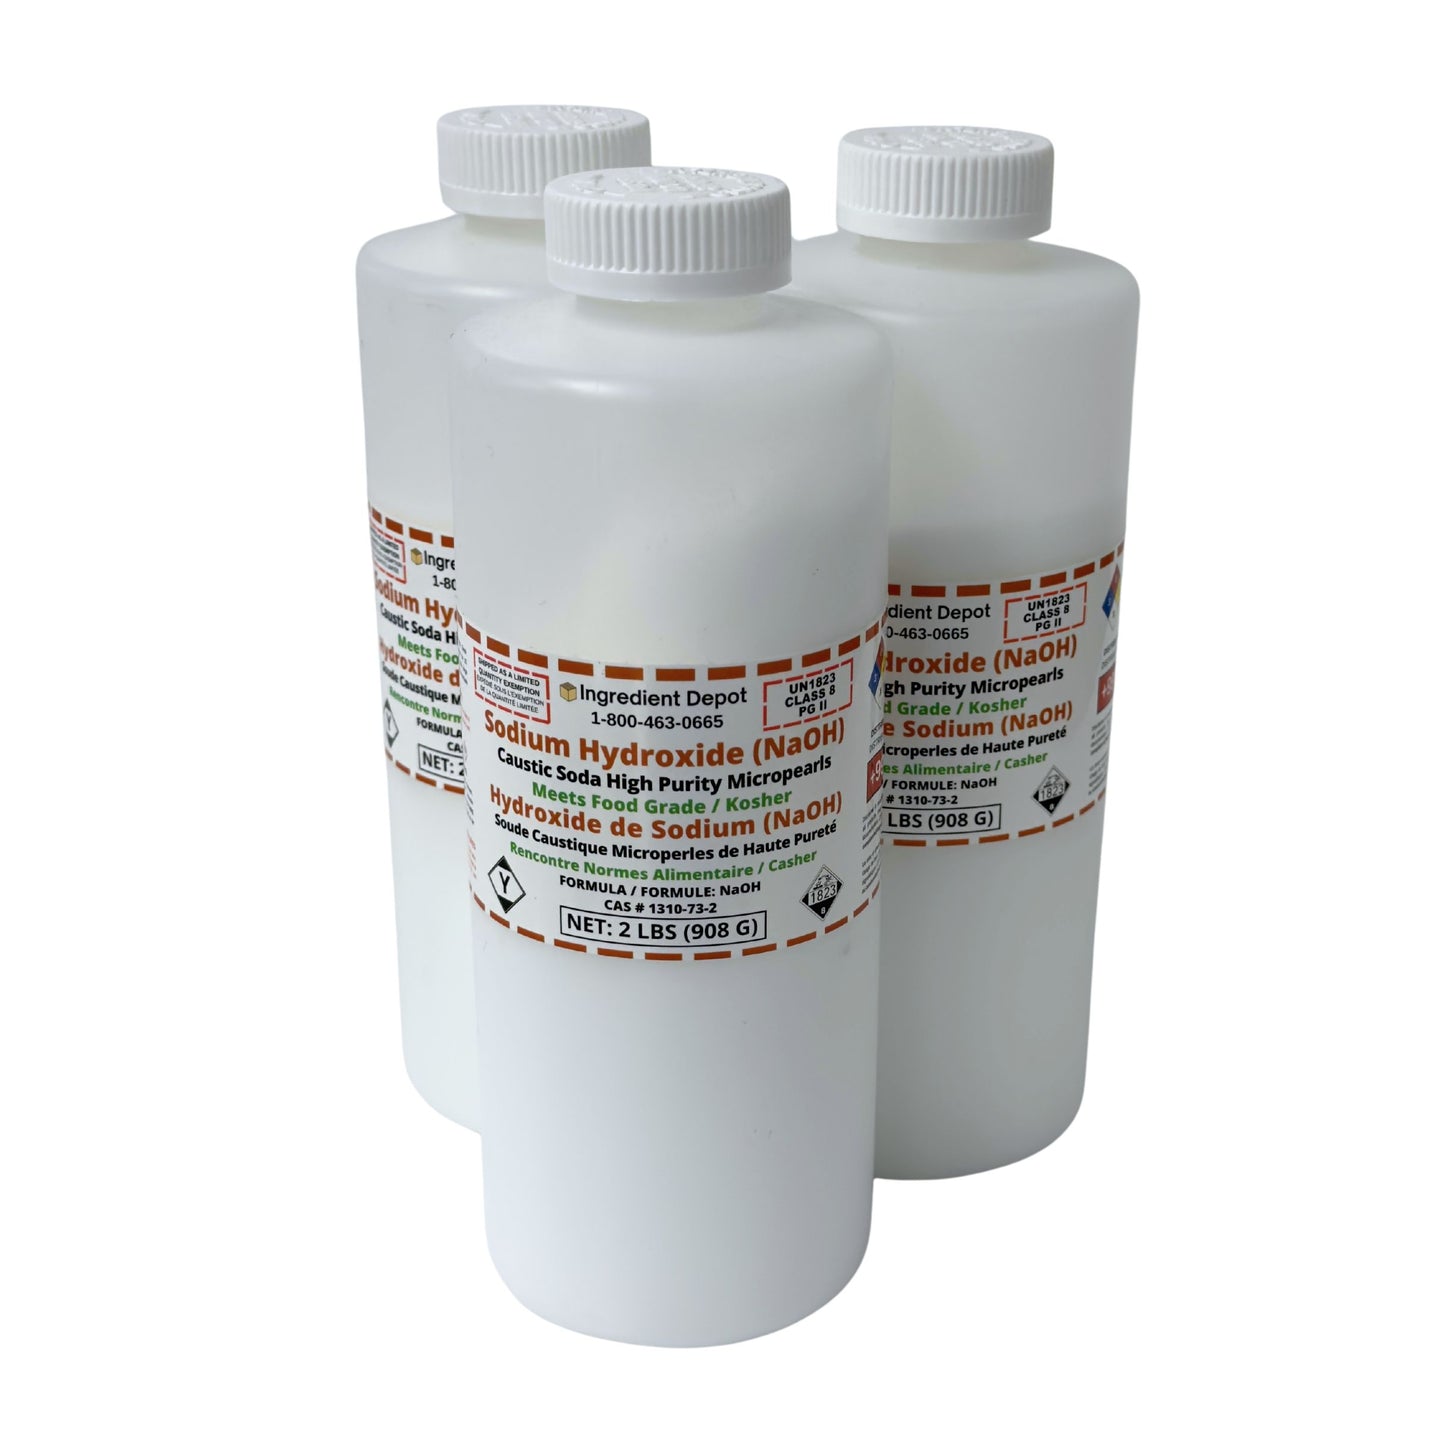 Sodium Hydroxide (NaOH or Caustic Soda) Micropearls 3 Jars